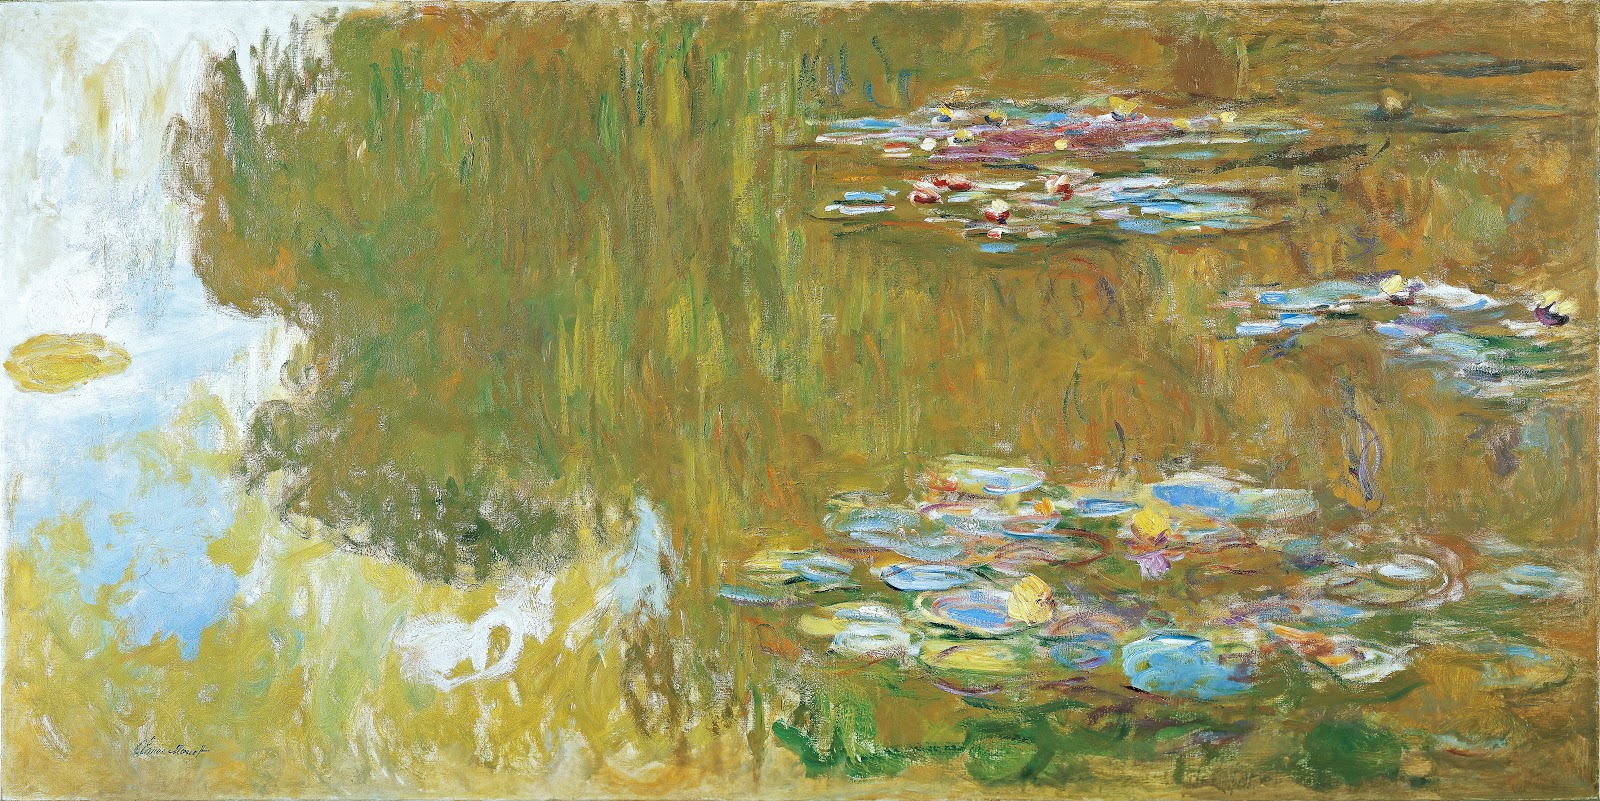 Claude+Monet-1840-1926 (417).jpg